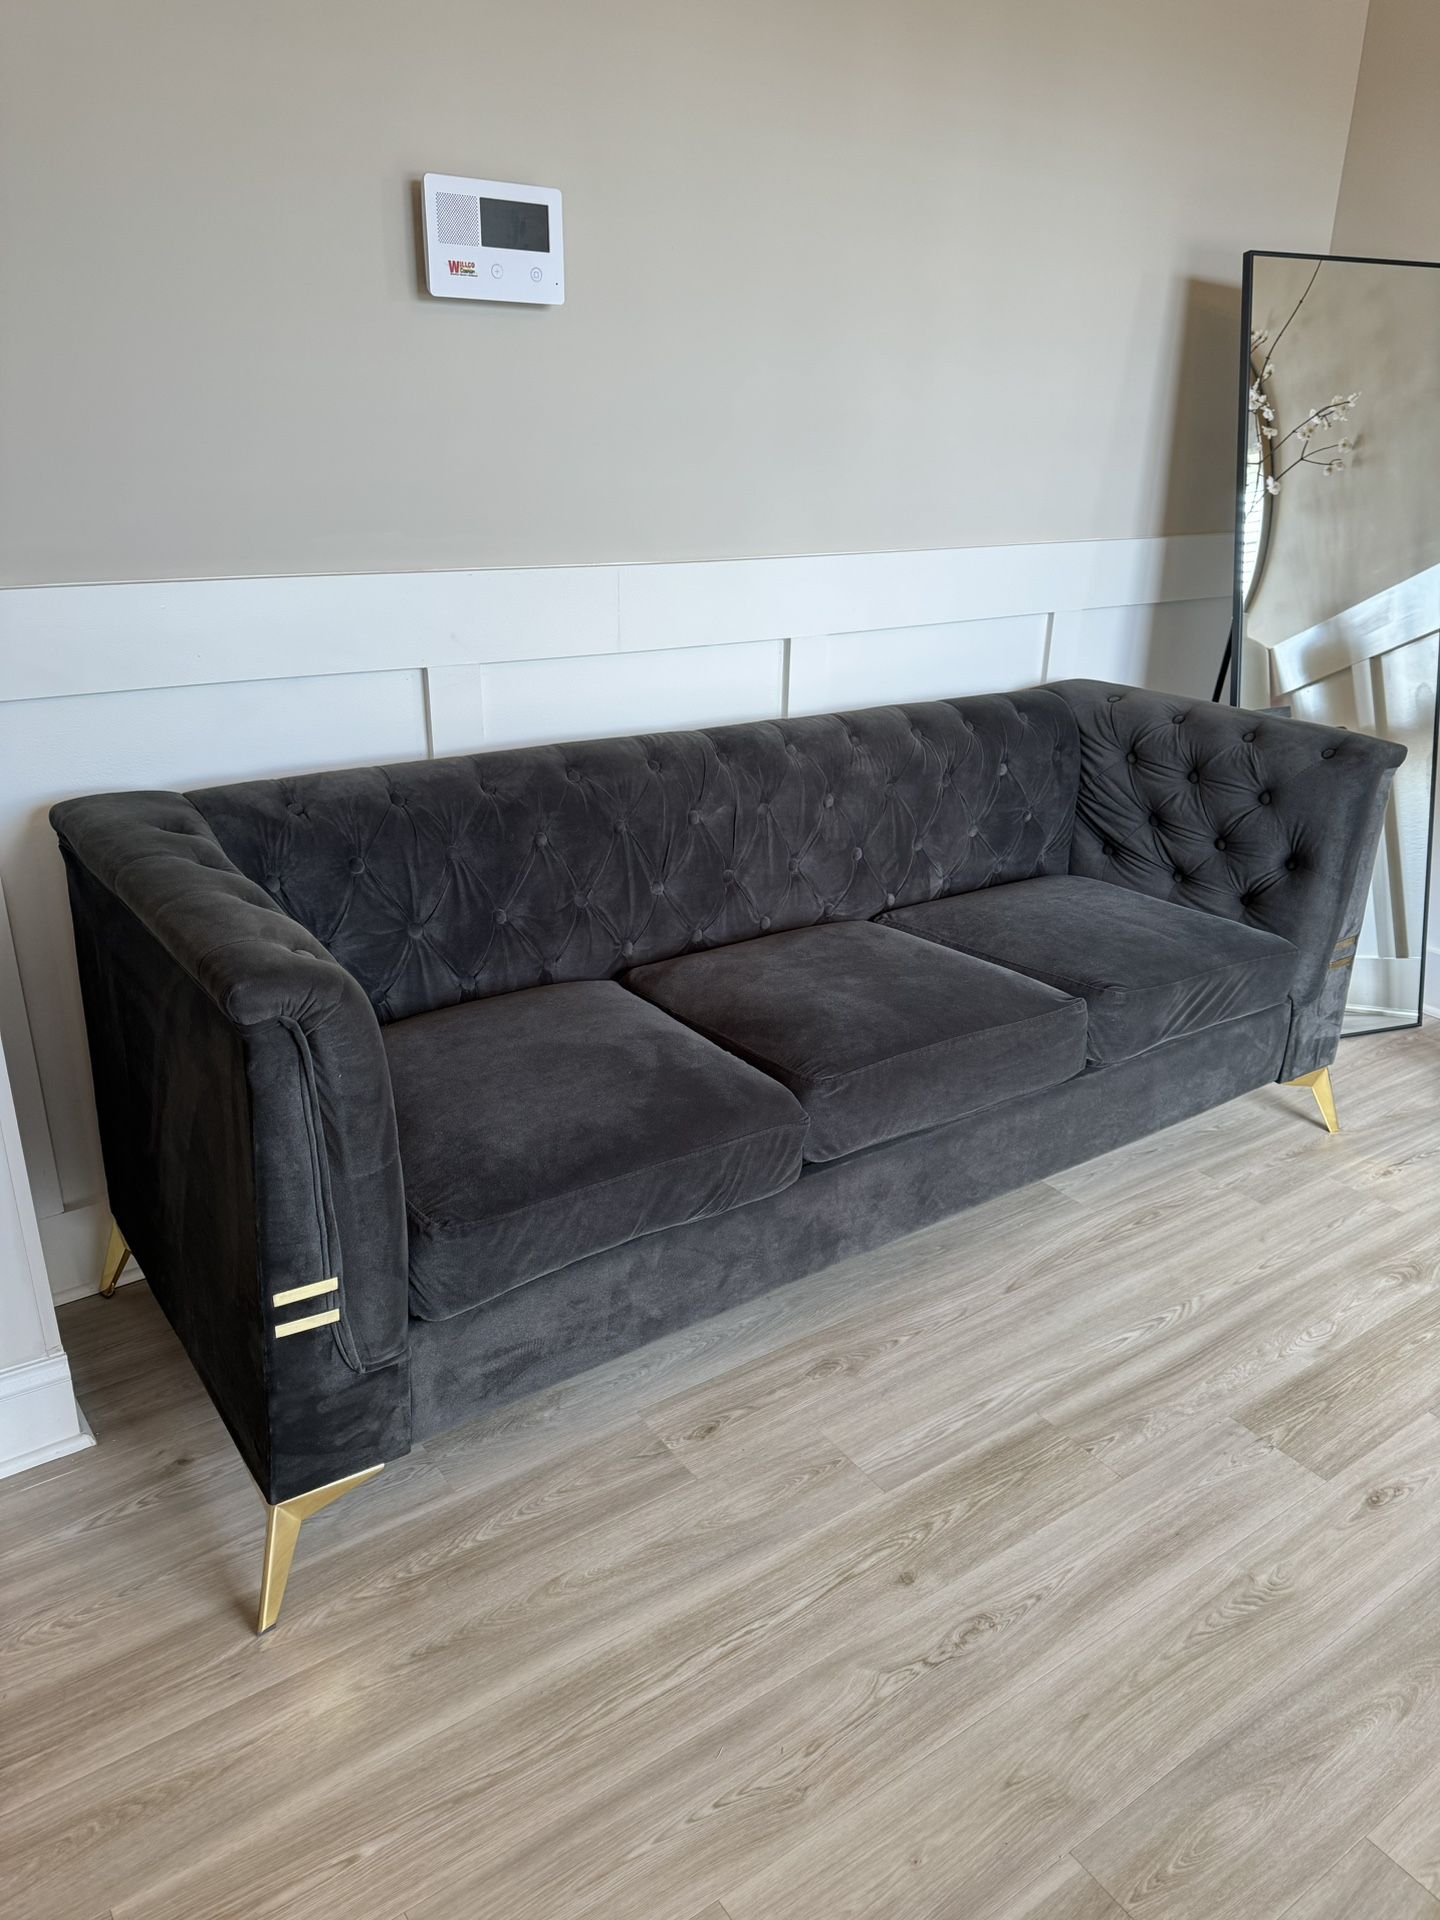 Black sofa with gold applications / Sofa negro con herrajes dorados